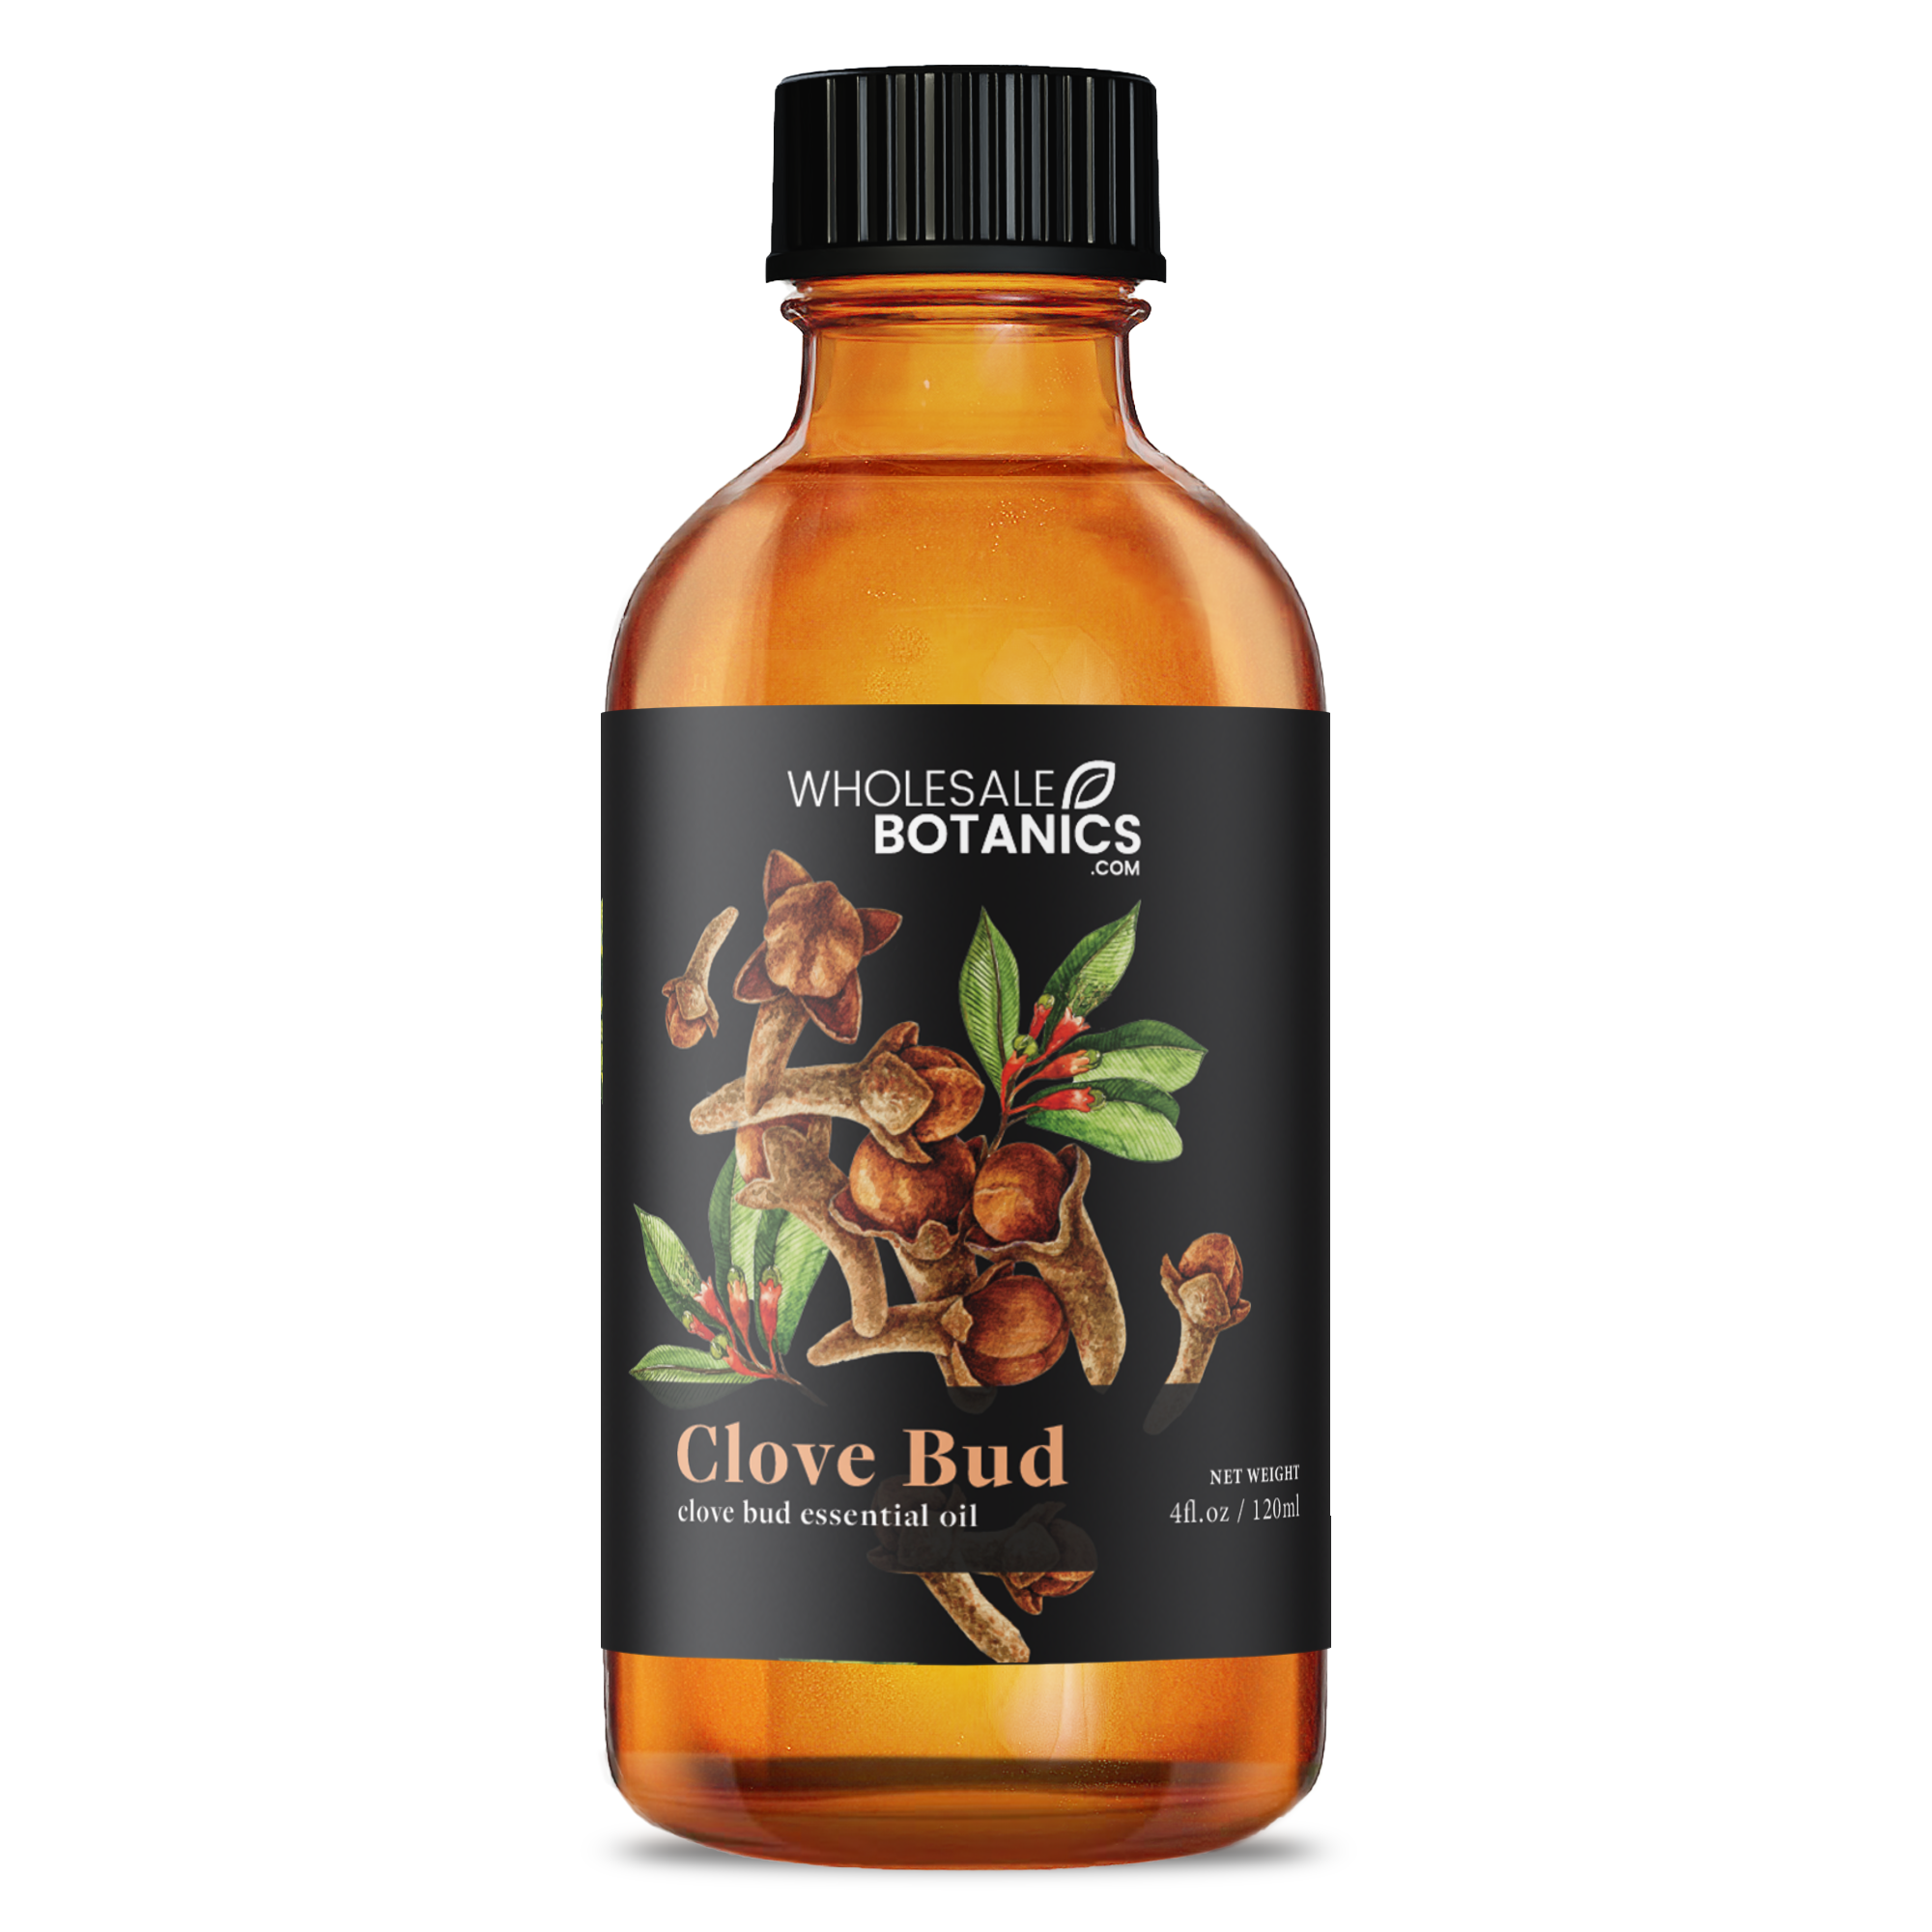 Clove Bud Essential Oil